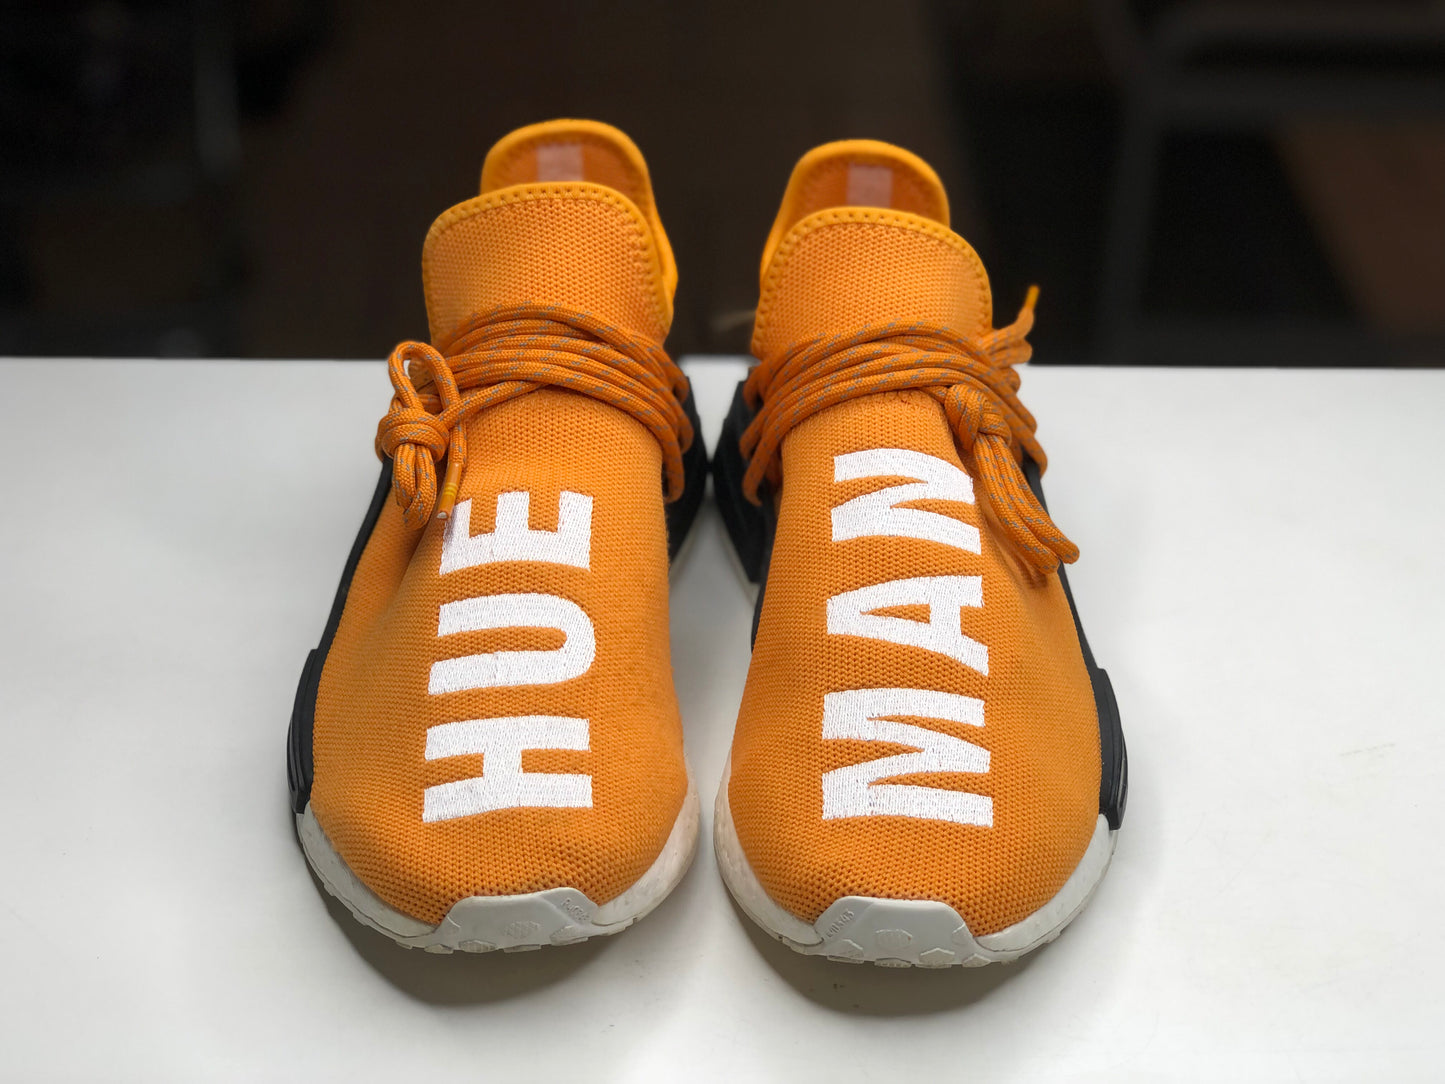 Adidas Human Race Man Tangerine size 7